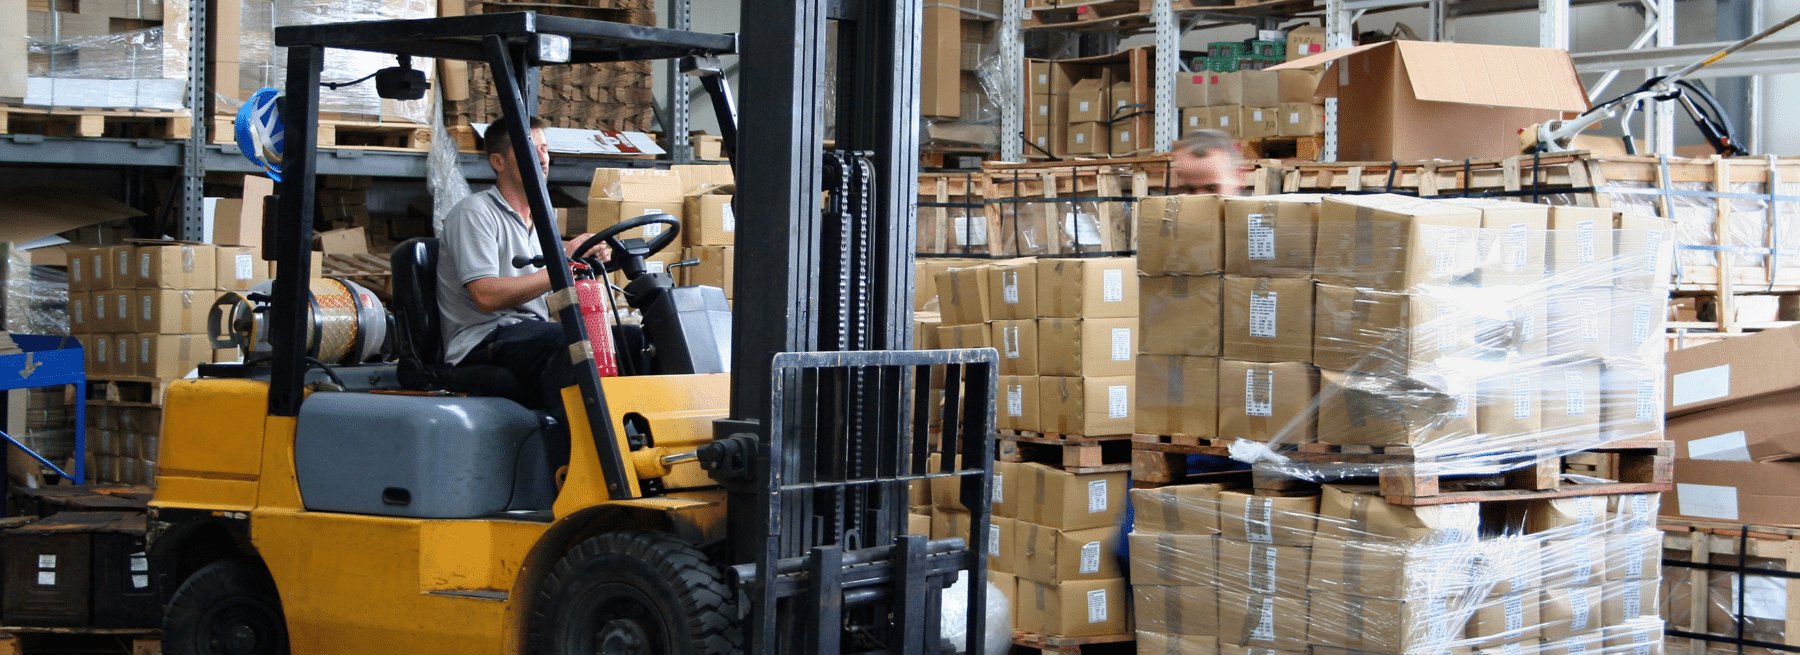 warehouse safety protocols